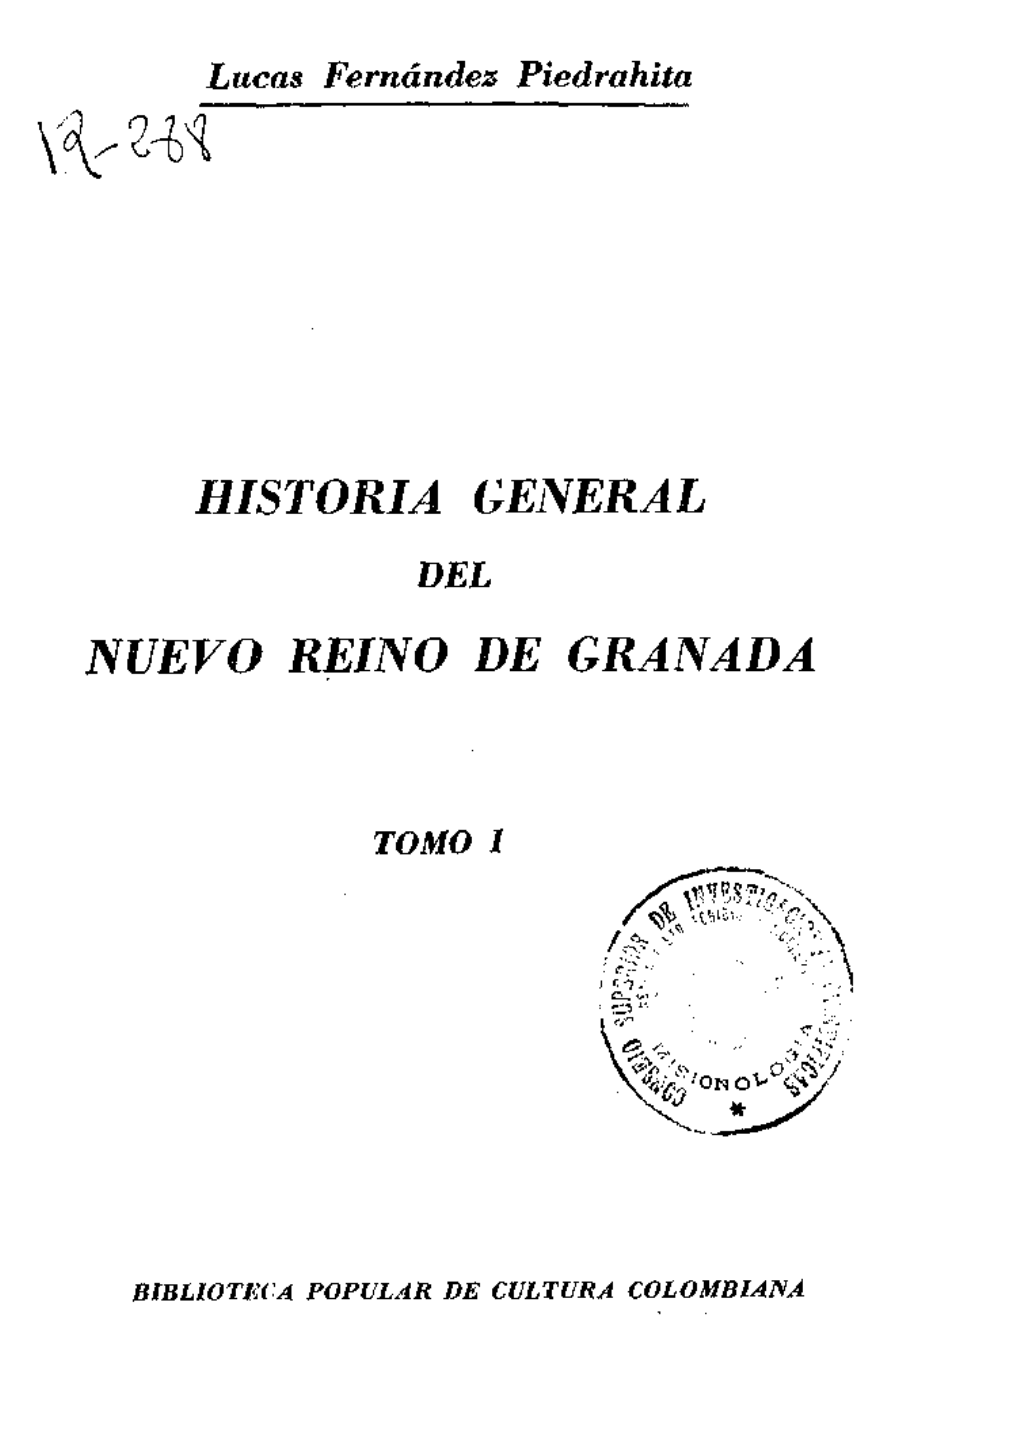 Historia General Nuevo Reino De Granada